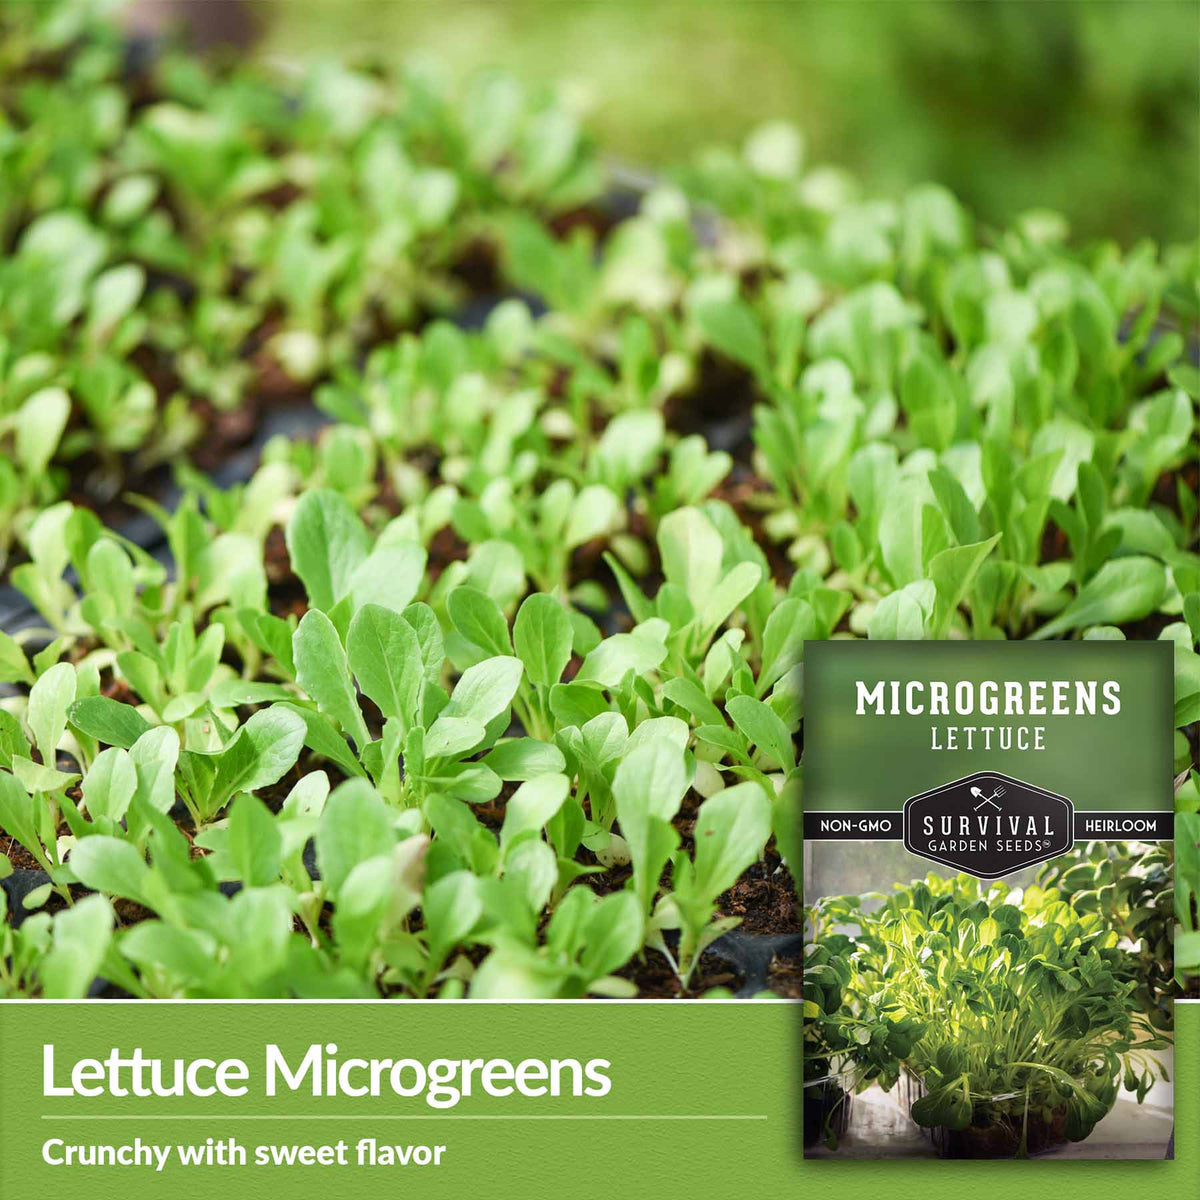 Lettuce microgreens